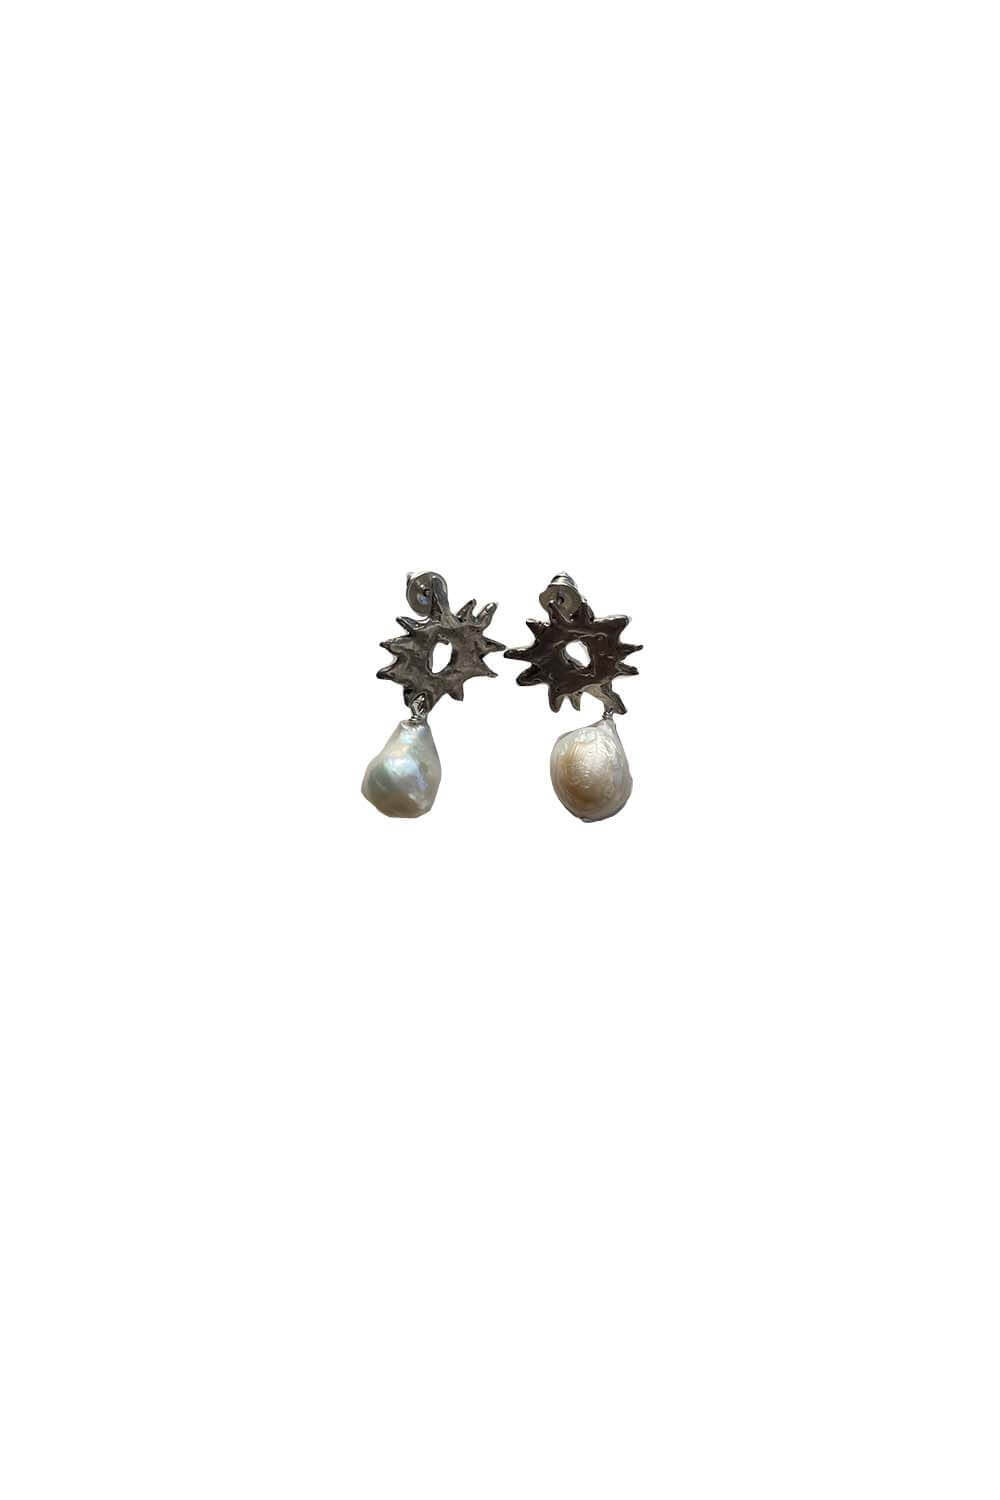 Fortune star earrings in pearl